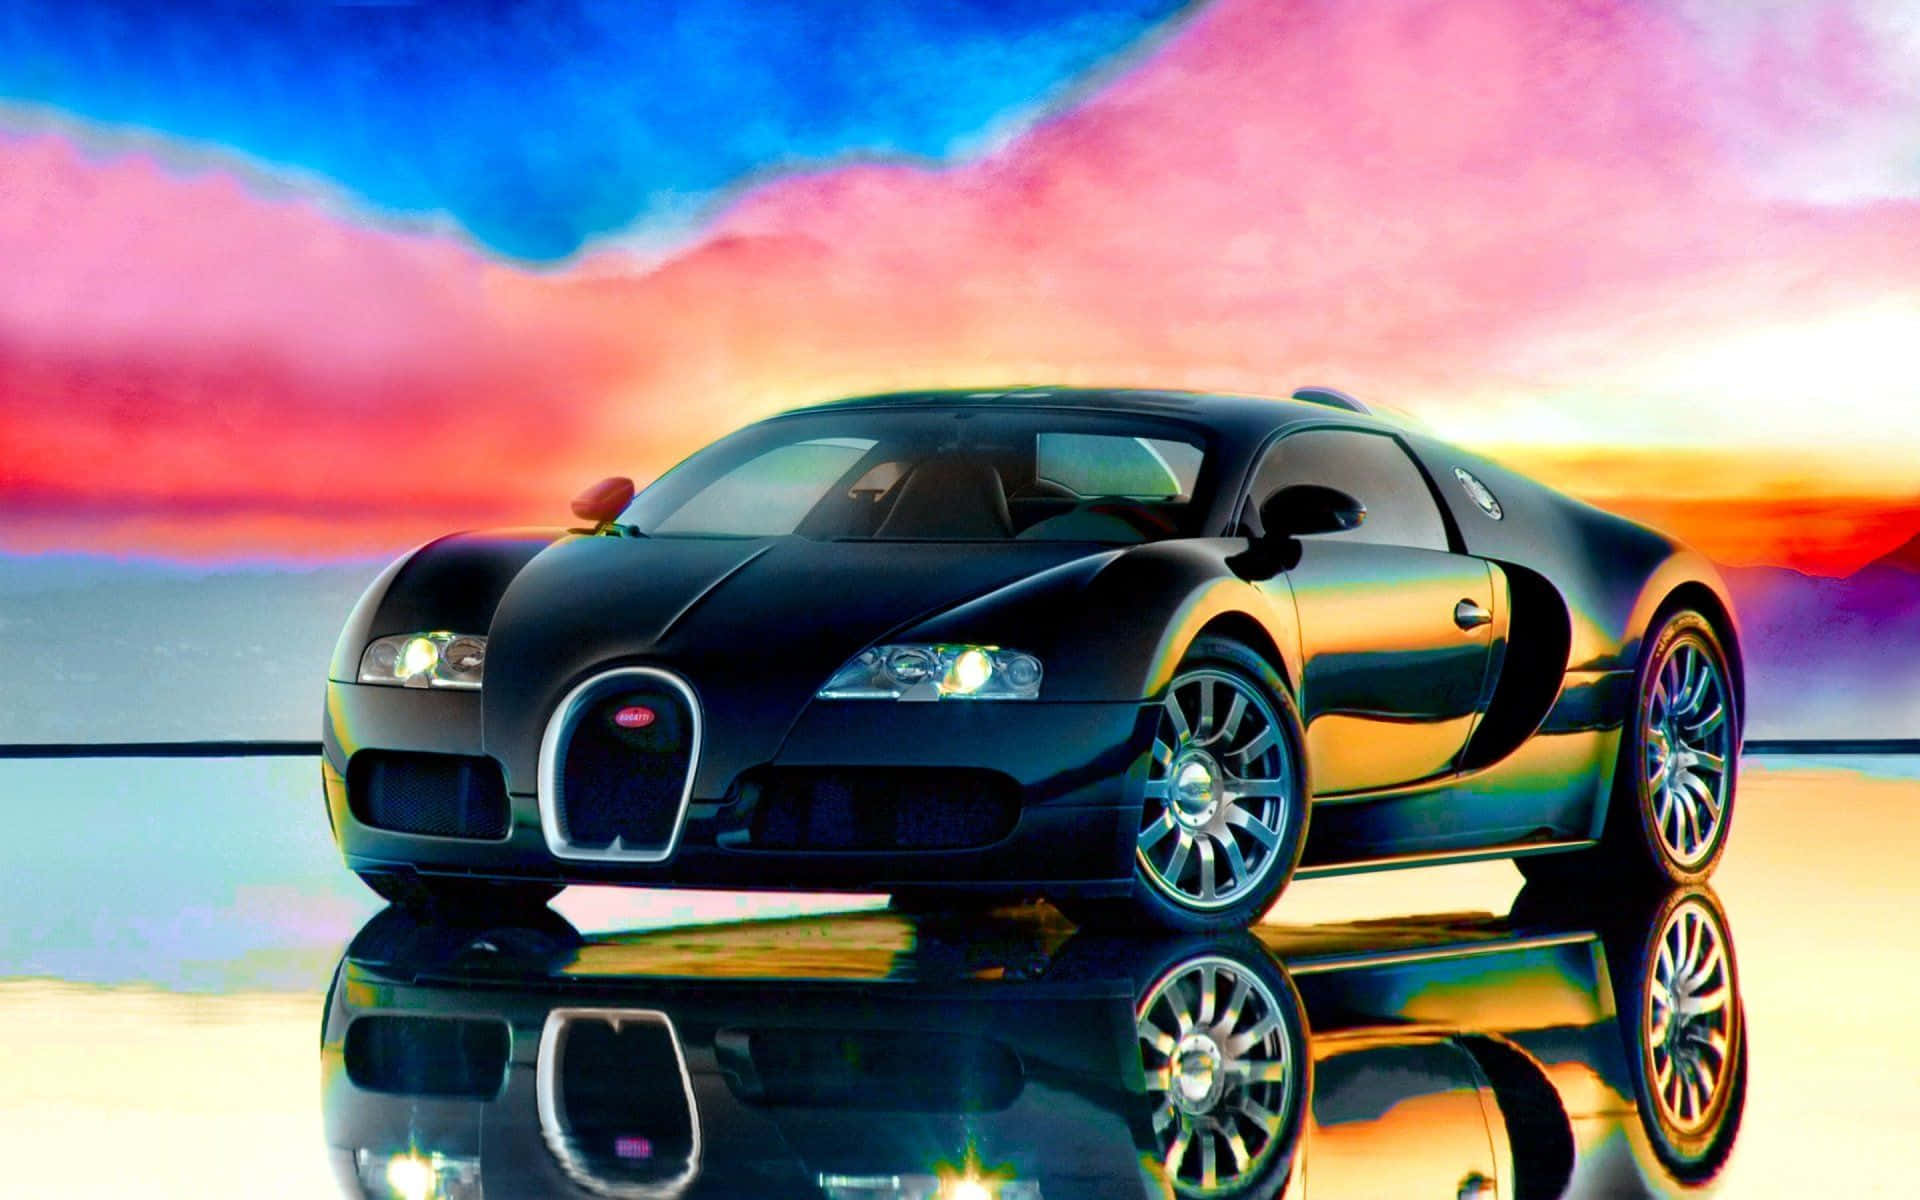 Lys op natten med denne Neon Bugatti Wallpaper! Wallpaper